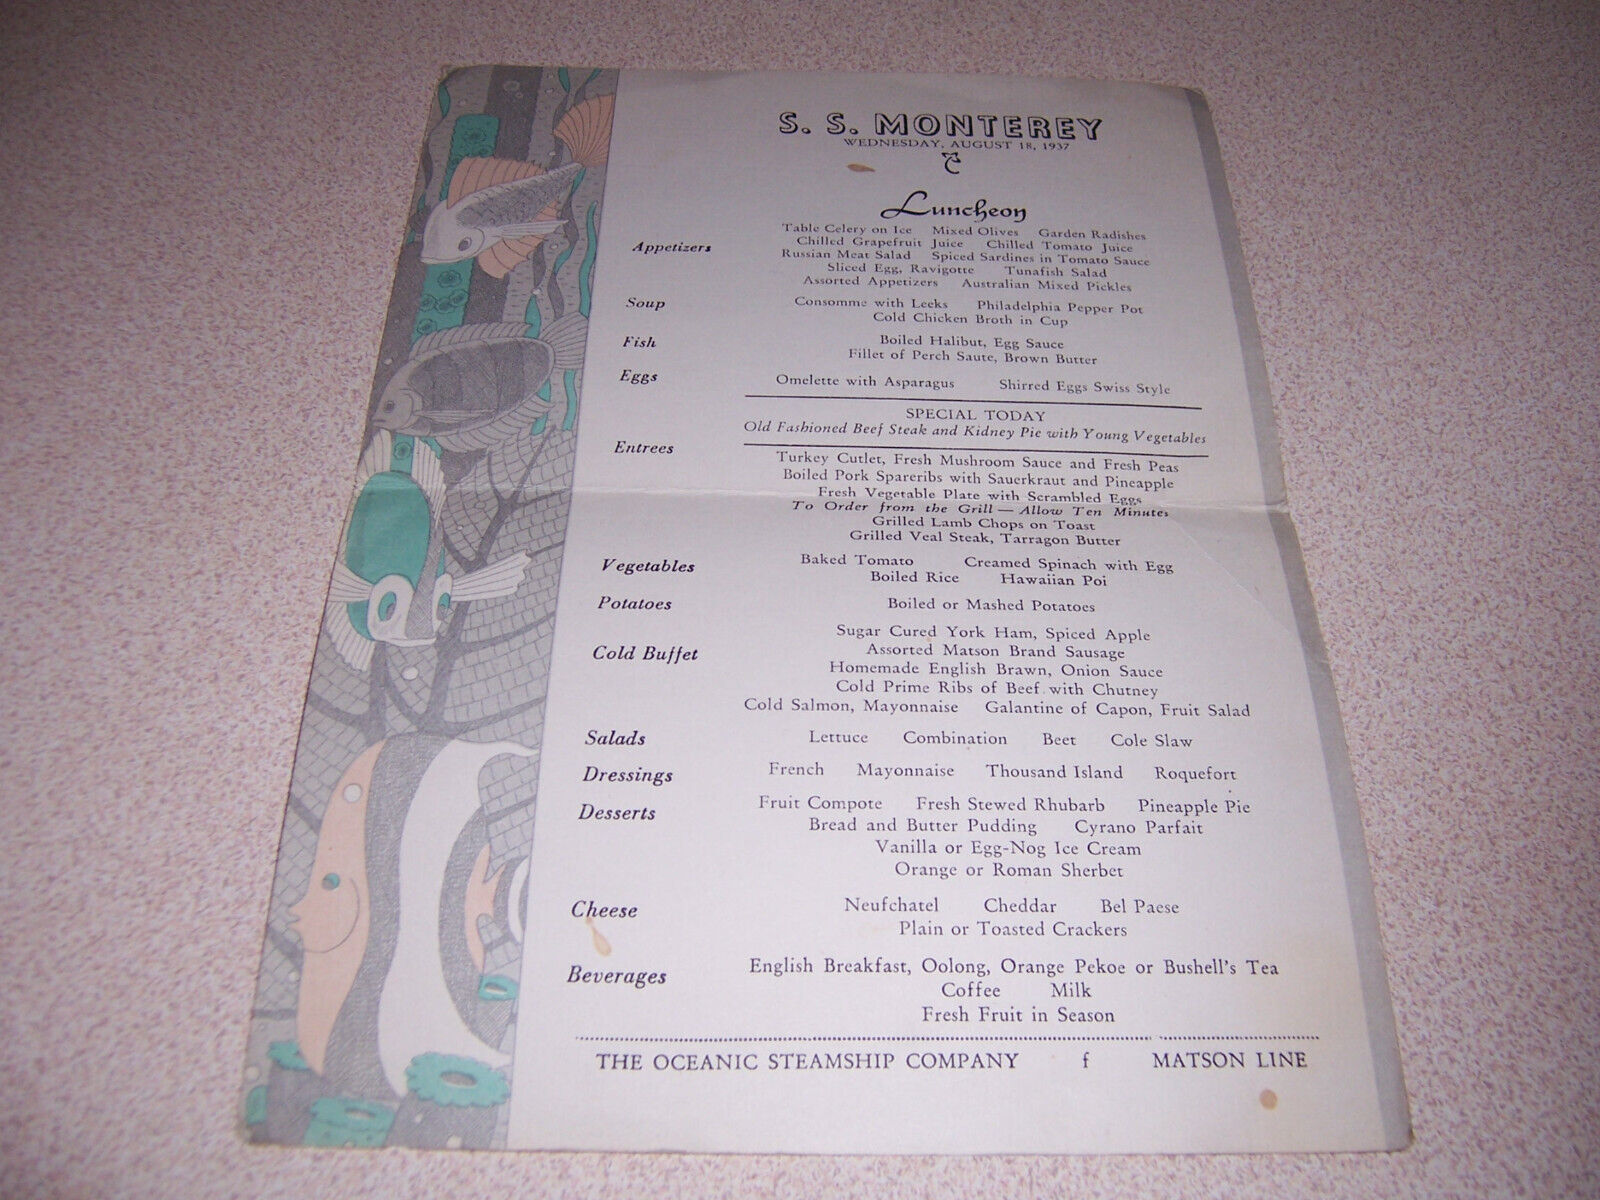 1937 SS MONTEREY LUNCHEON MENU - OCEANIC STEAMSHIP COMPANY, MATSON LINE